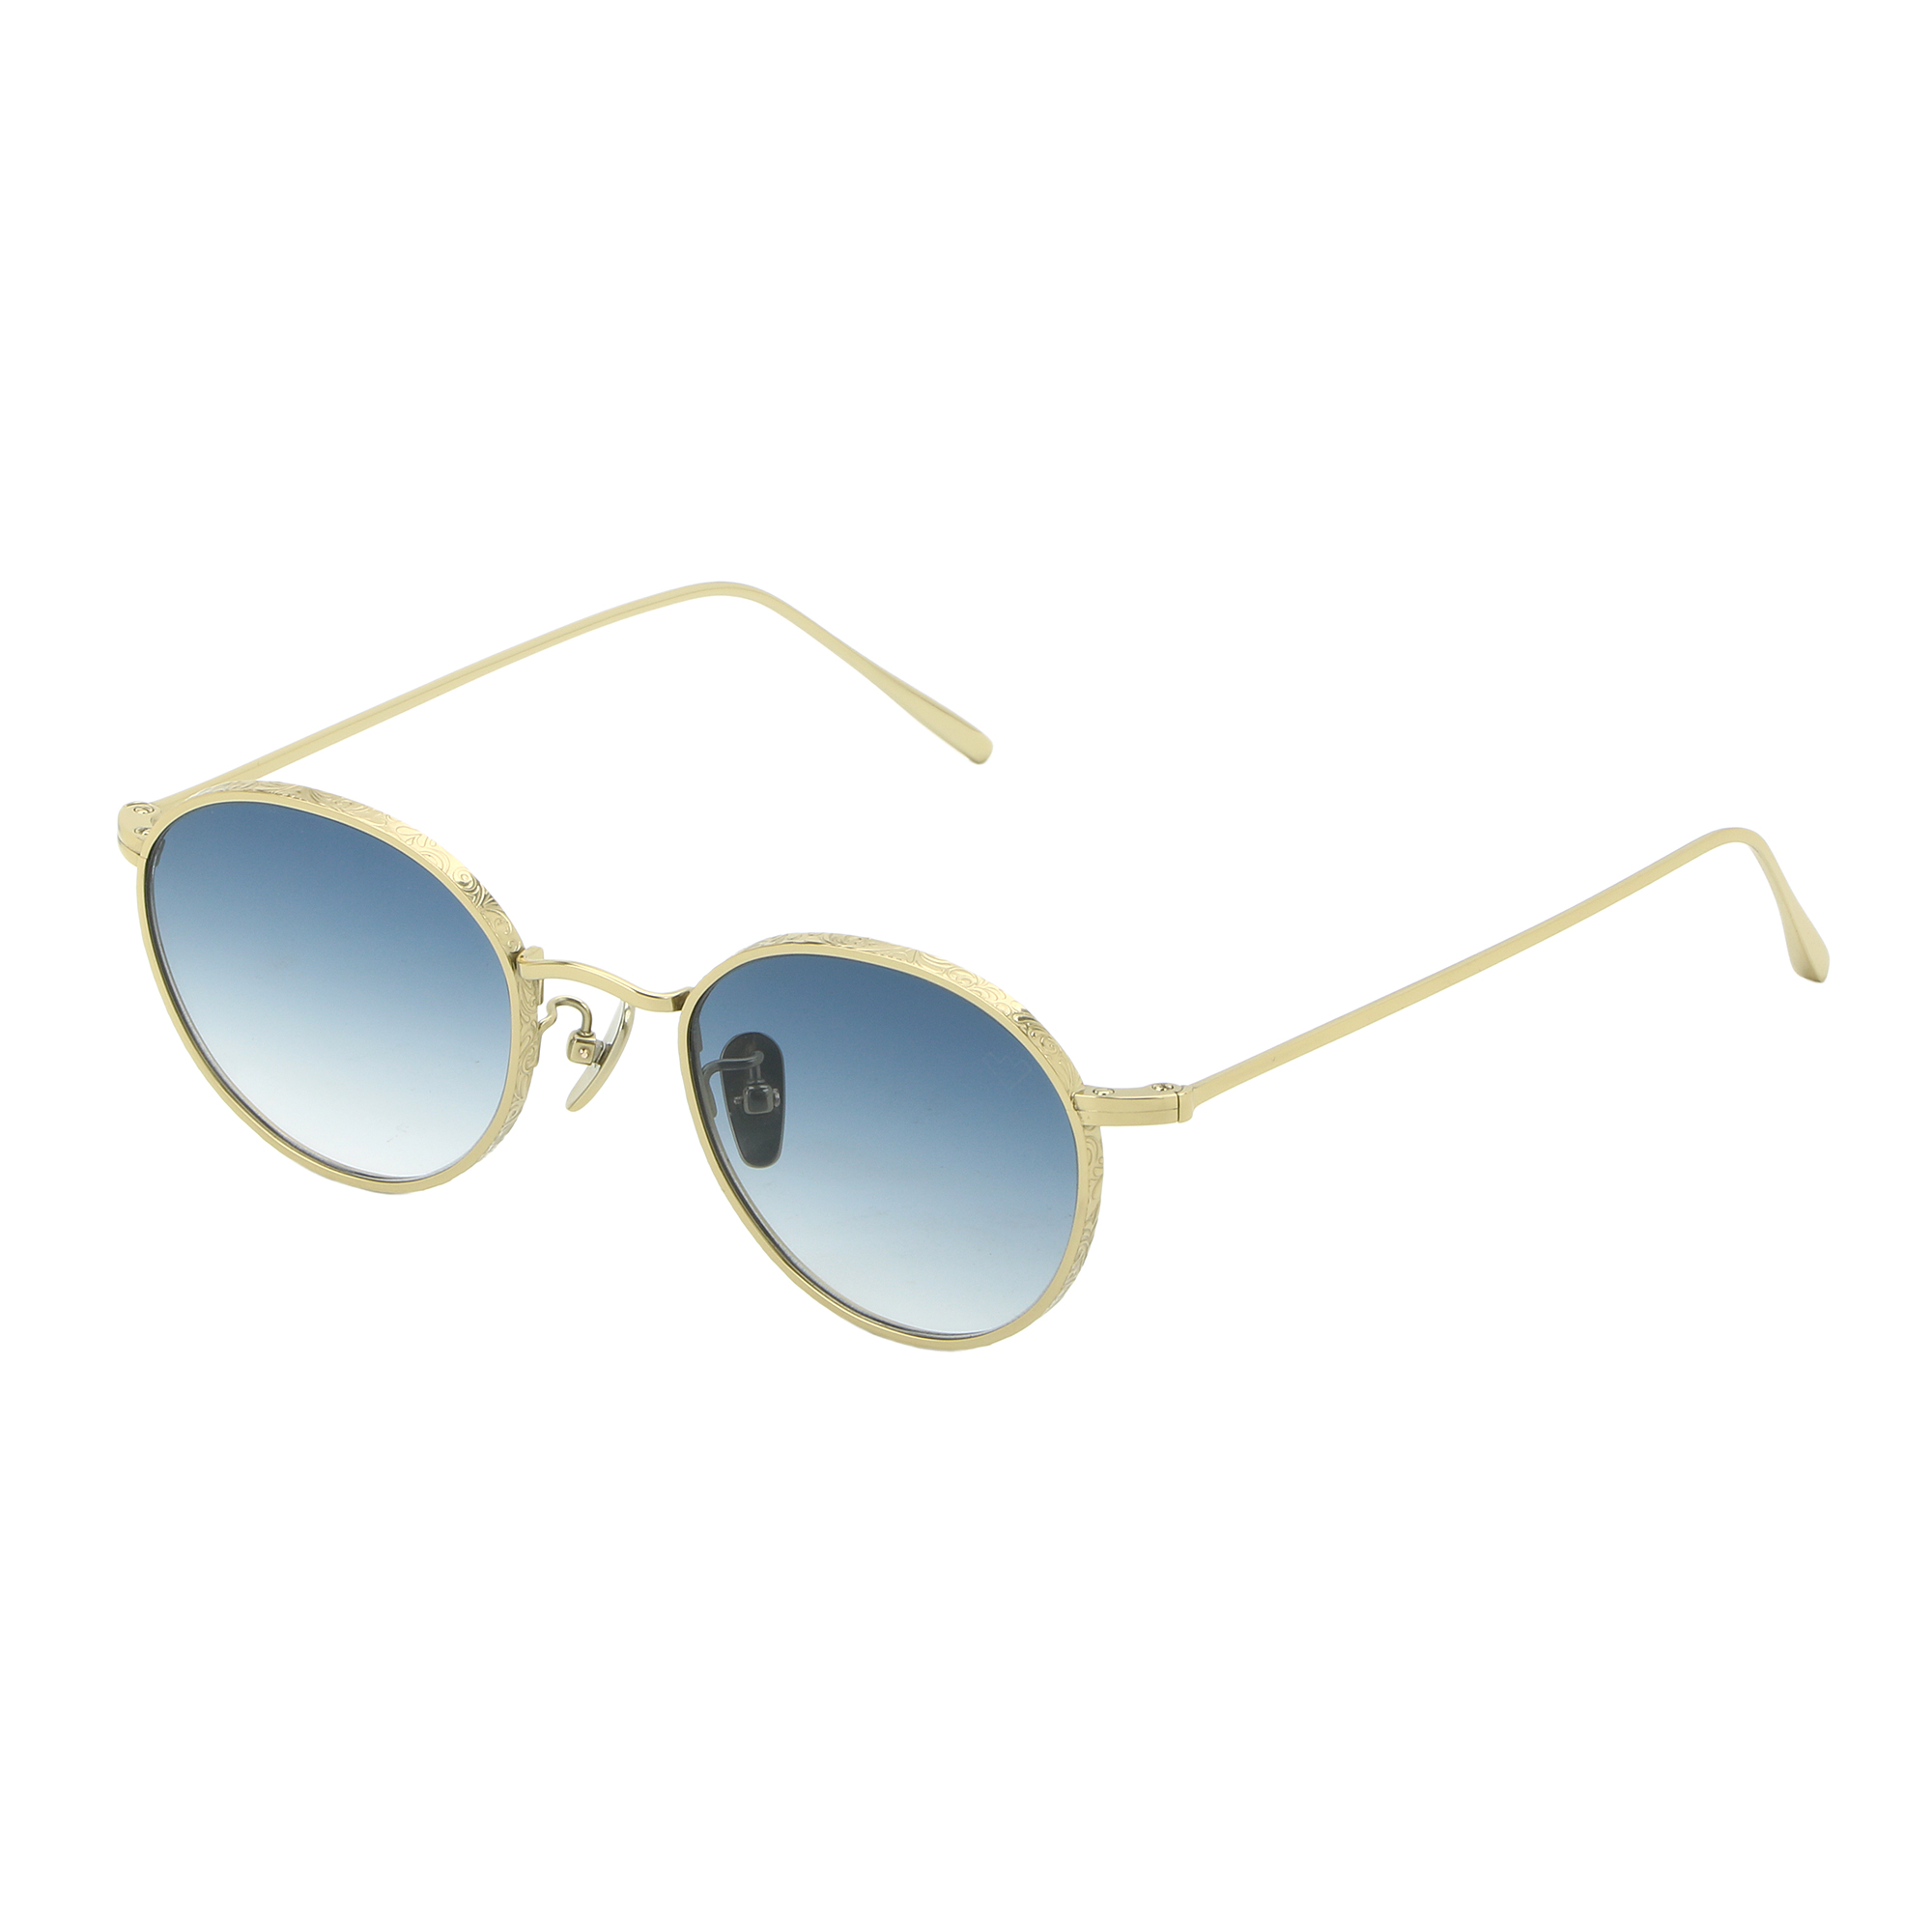 ARKEL SUN Spektre: hued lenses sunglasses, made in Italy sunglasses